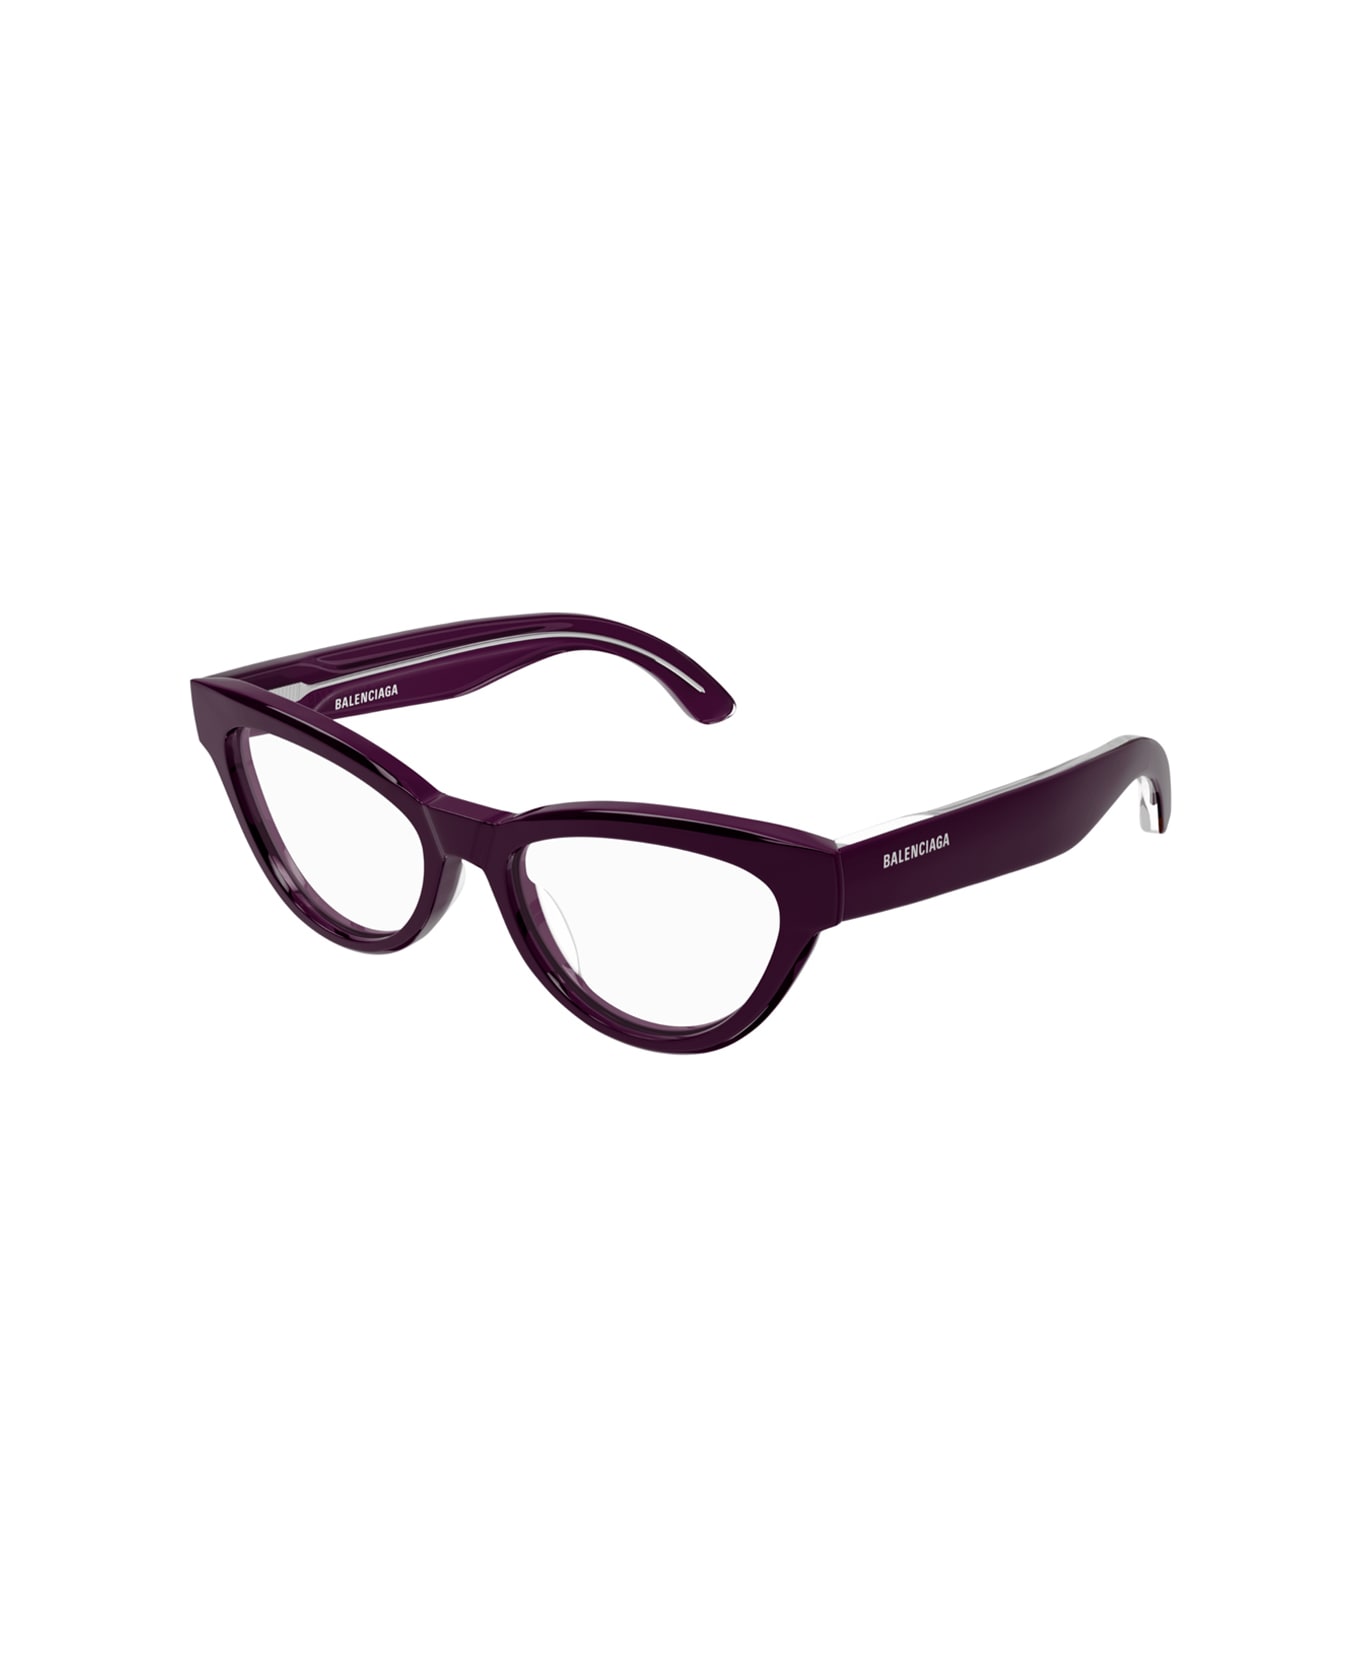 Balenciaga Eyewear Bb0241o Linea Everyday 003 Glasses - Viola アイウェア